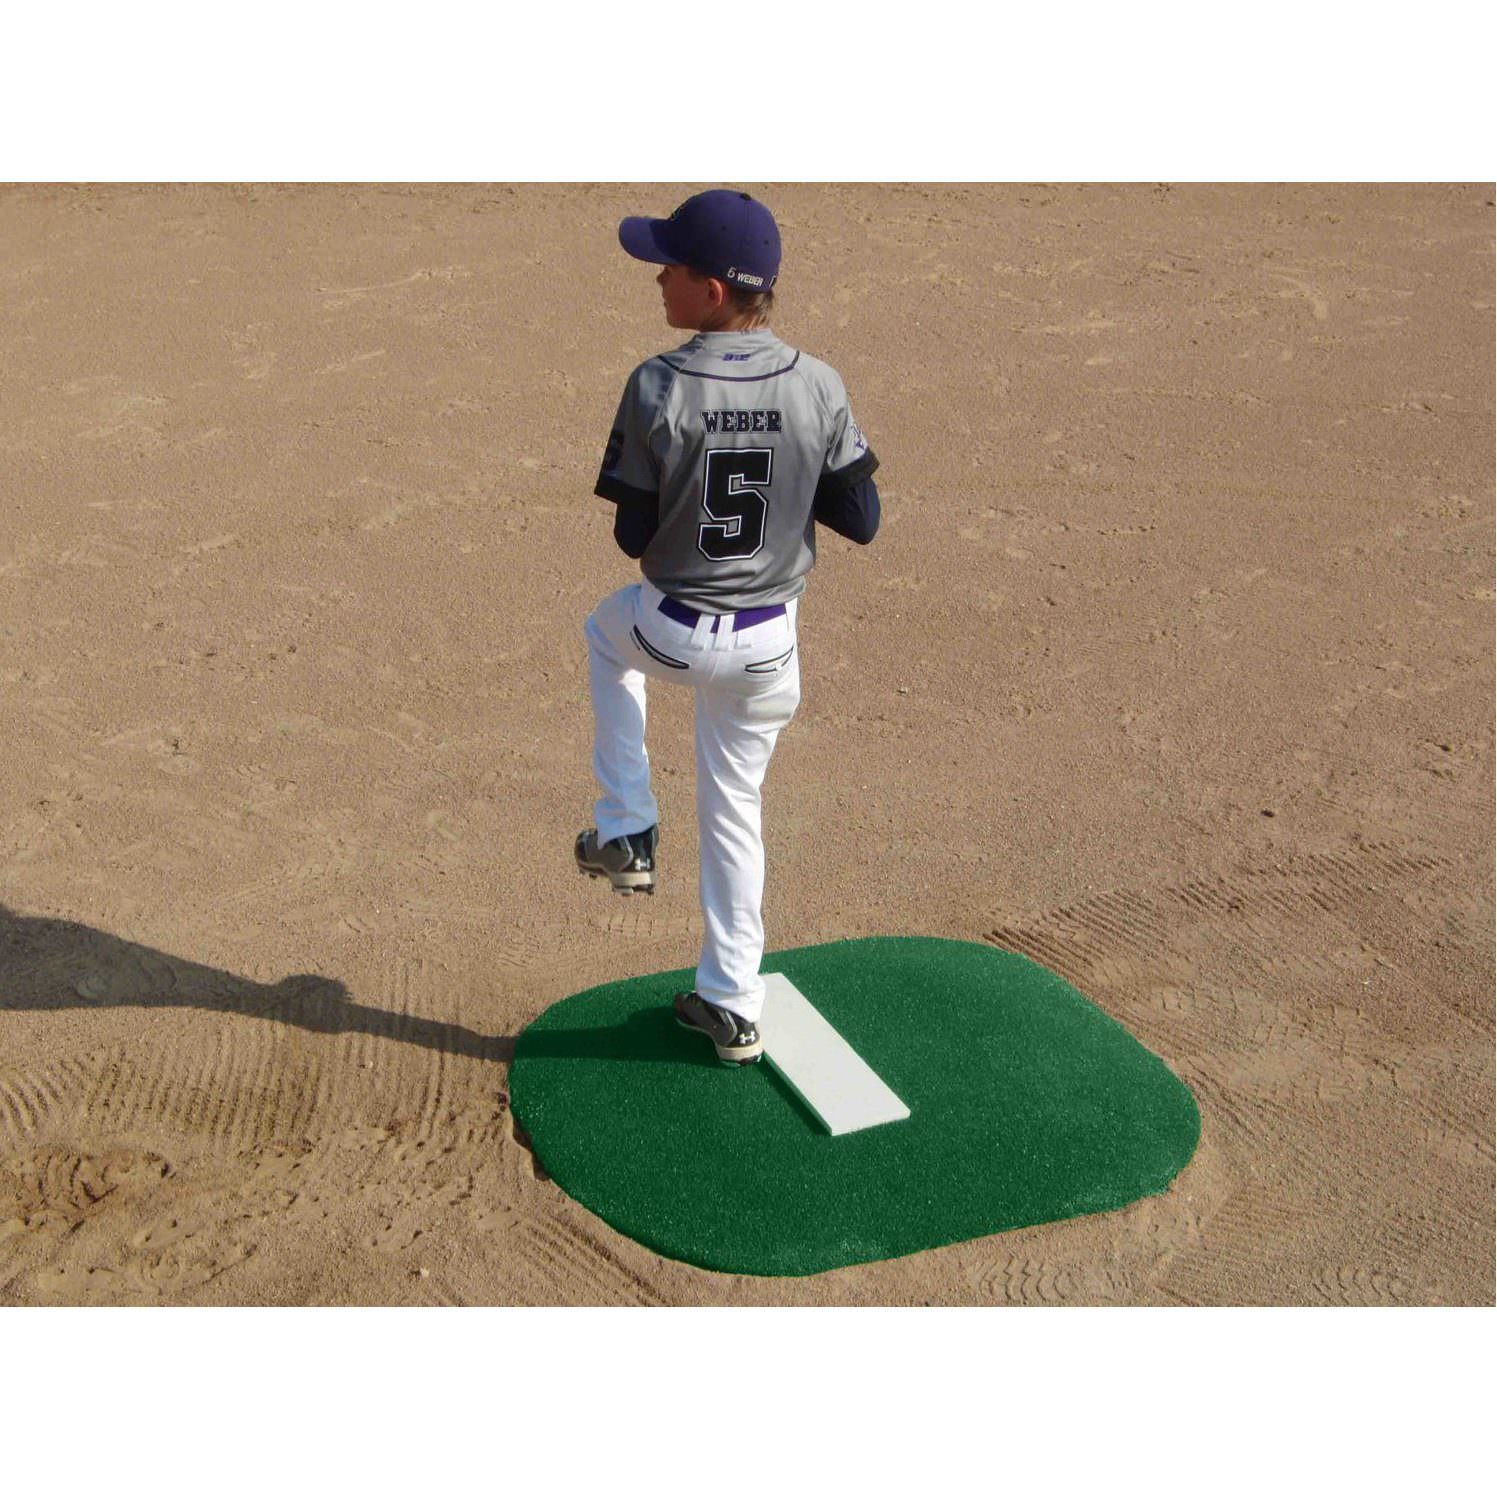 PortoLite 4" Youth Portable Baseball Pitching Mound green turf kid pitching side view